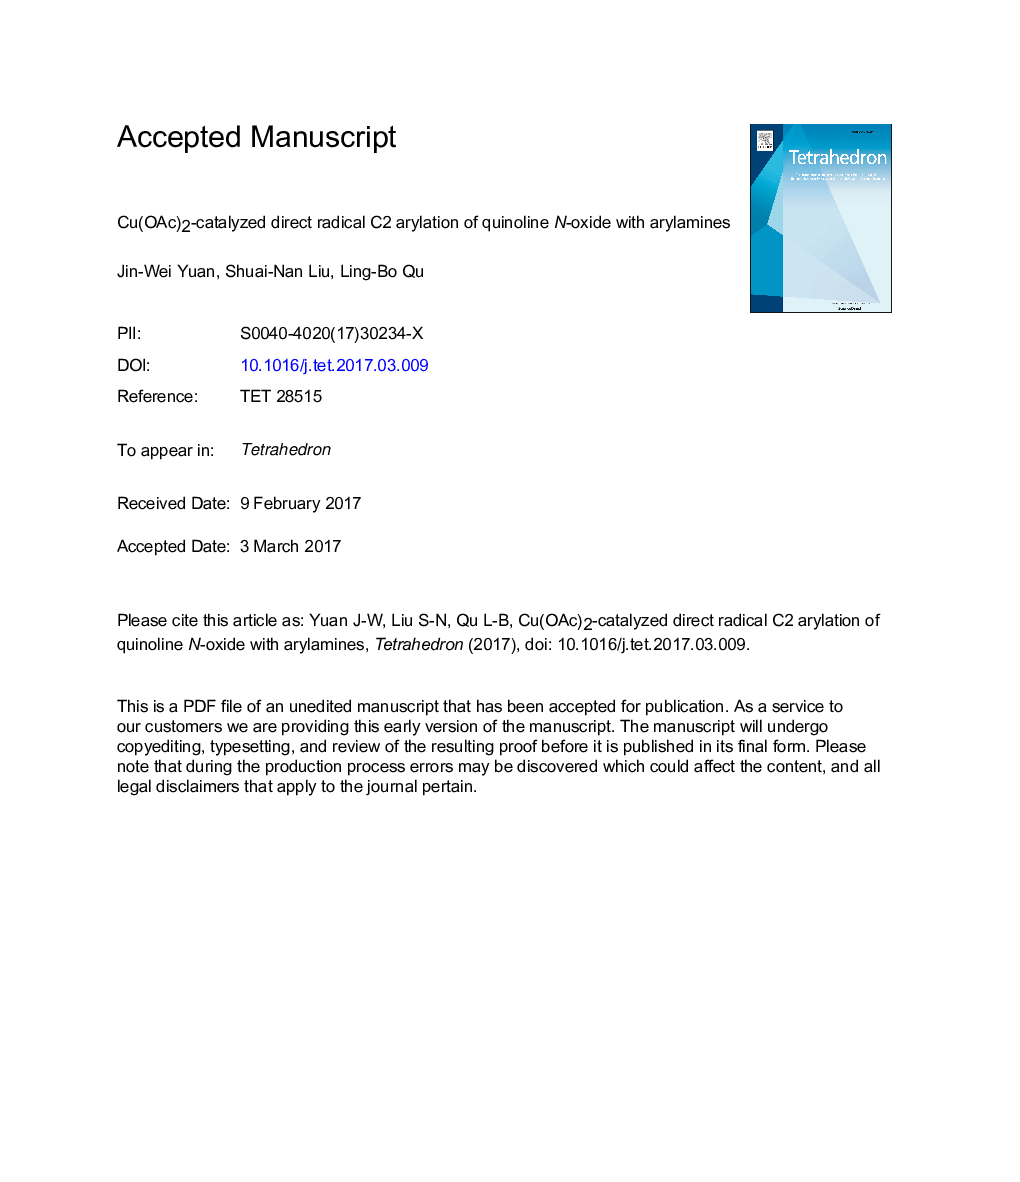 Cu(OAc)2-catalyzed direct radical C2 arylation of quinoline N-oxide with arylamines